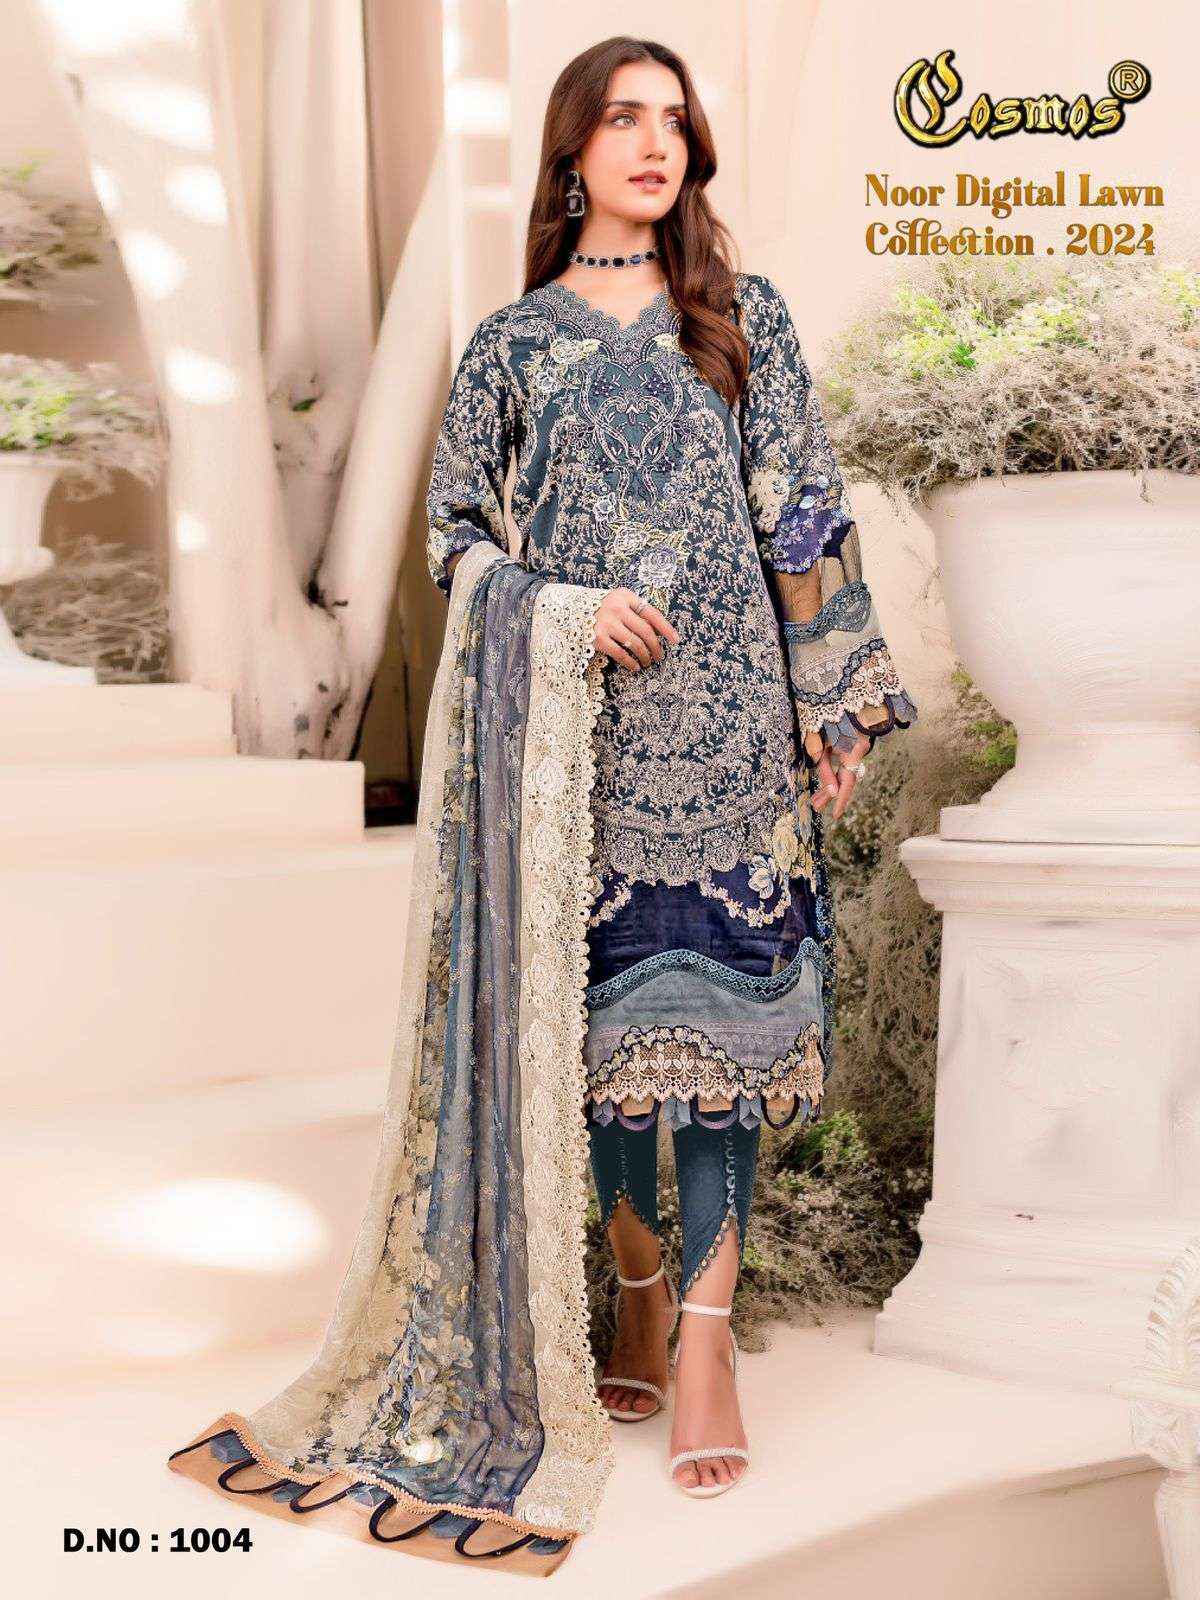 Cosmos Noor Digital Lawn Collection 24 Readymade Cotton Dress 8 pcs Catalogue